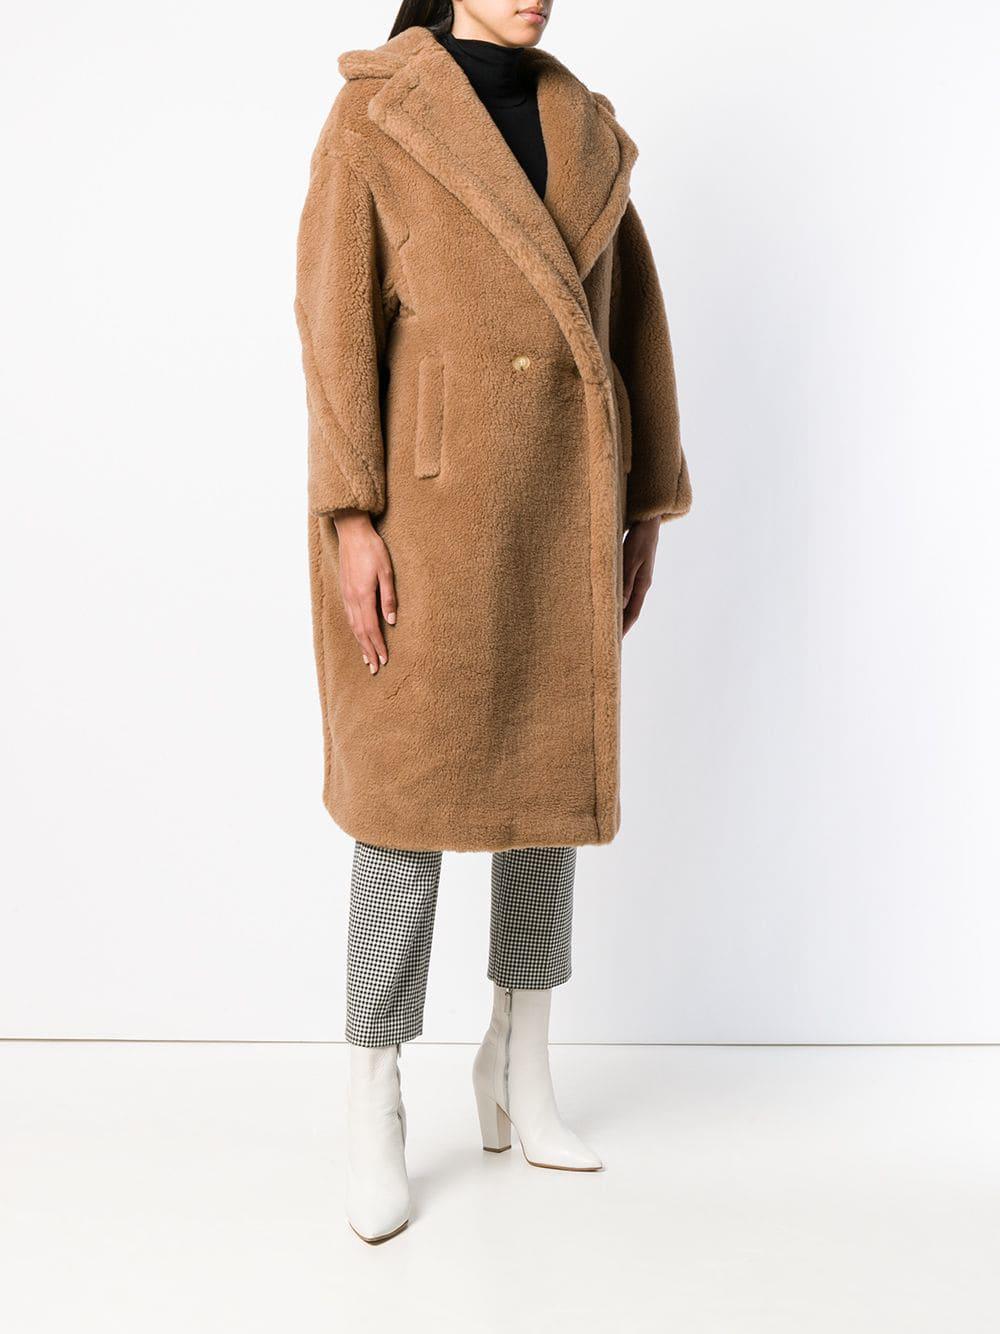 Max Mara Silk Teddy Bear Coat in Brown - Lyst